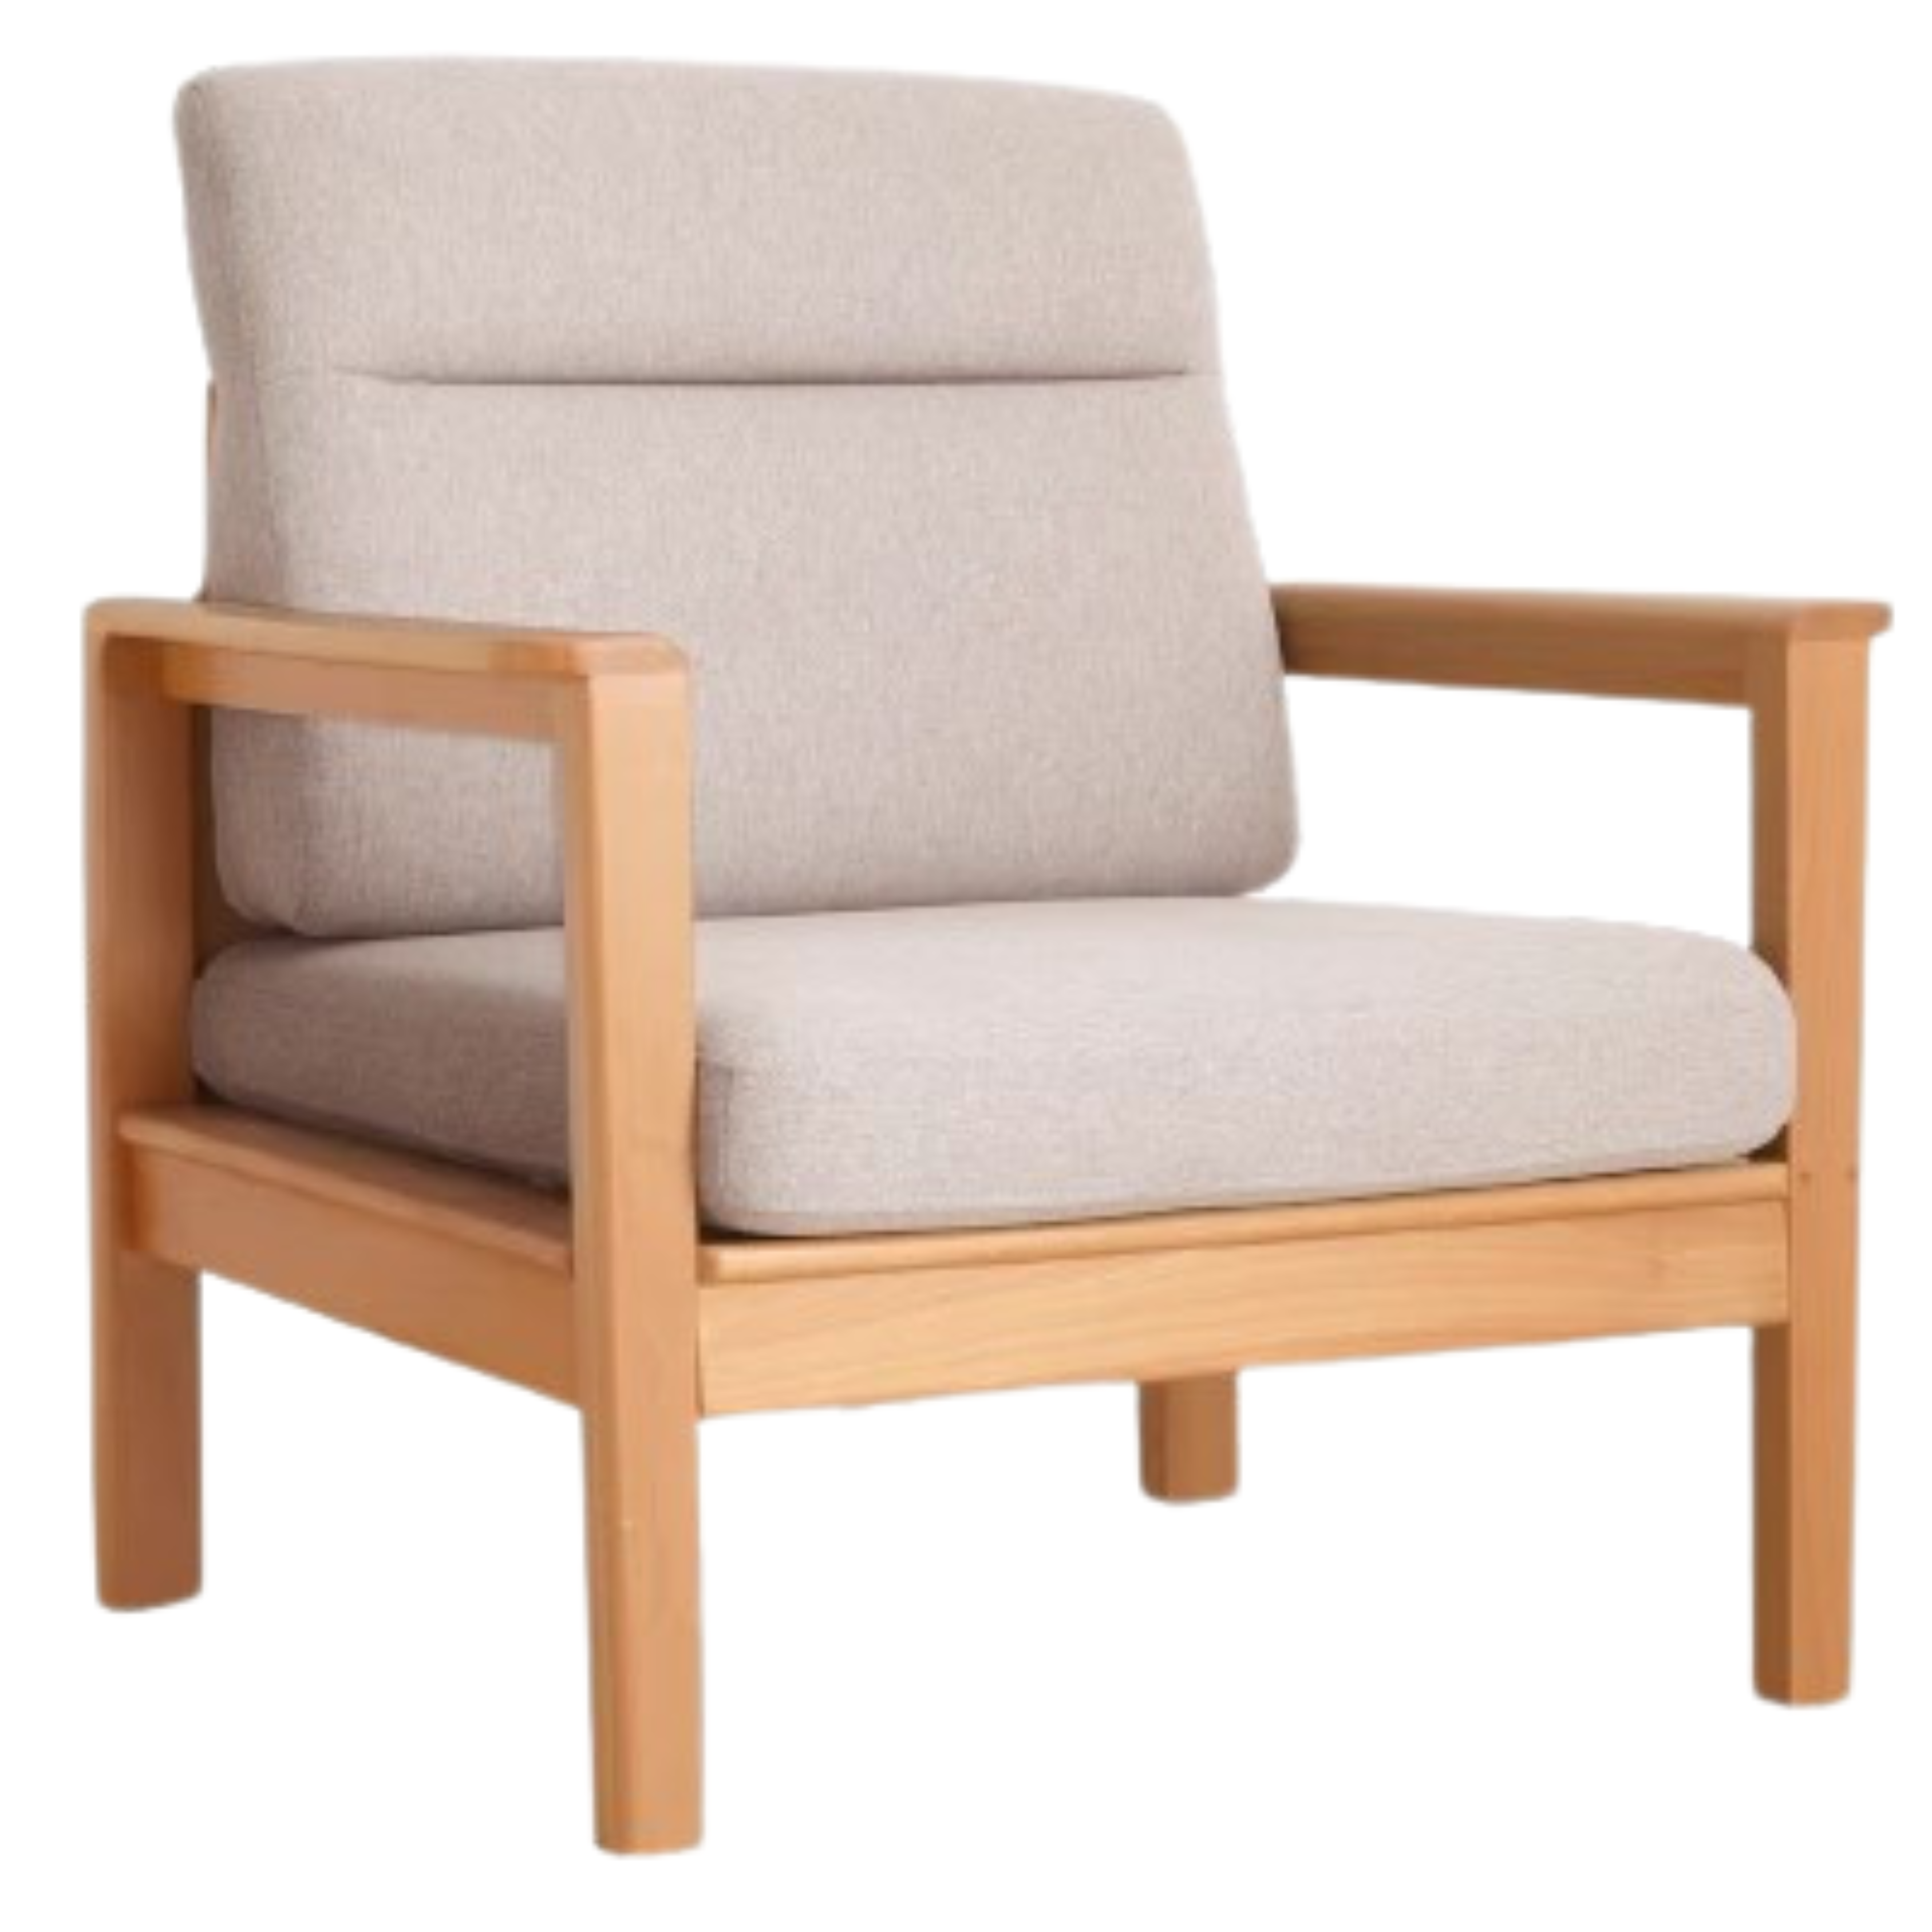 Beech solid wood armchair modern minimalist)